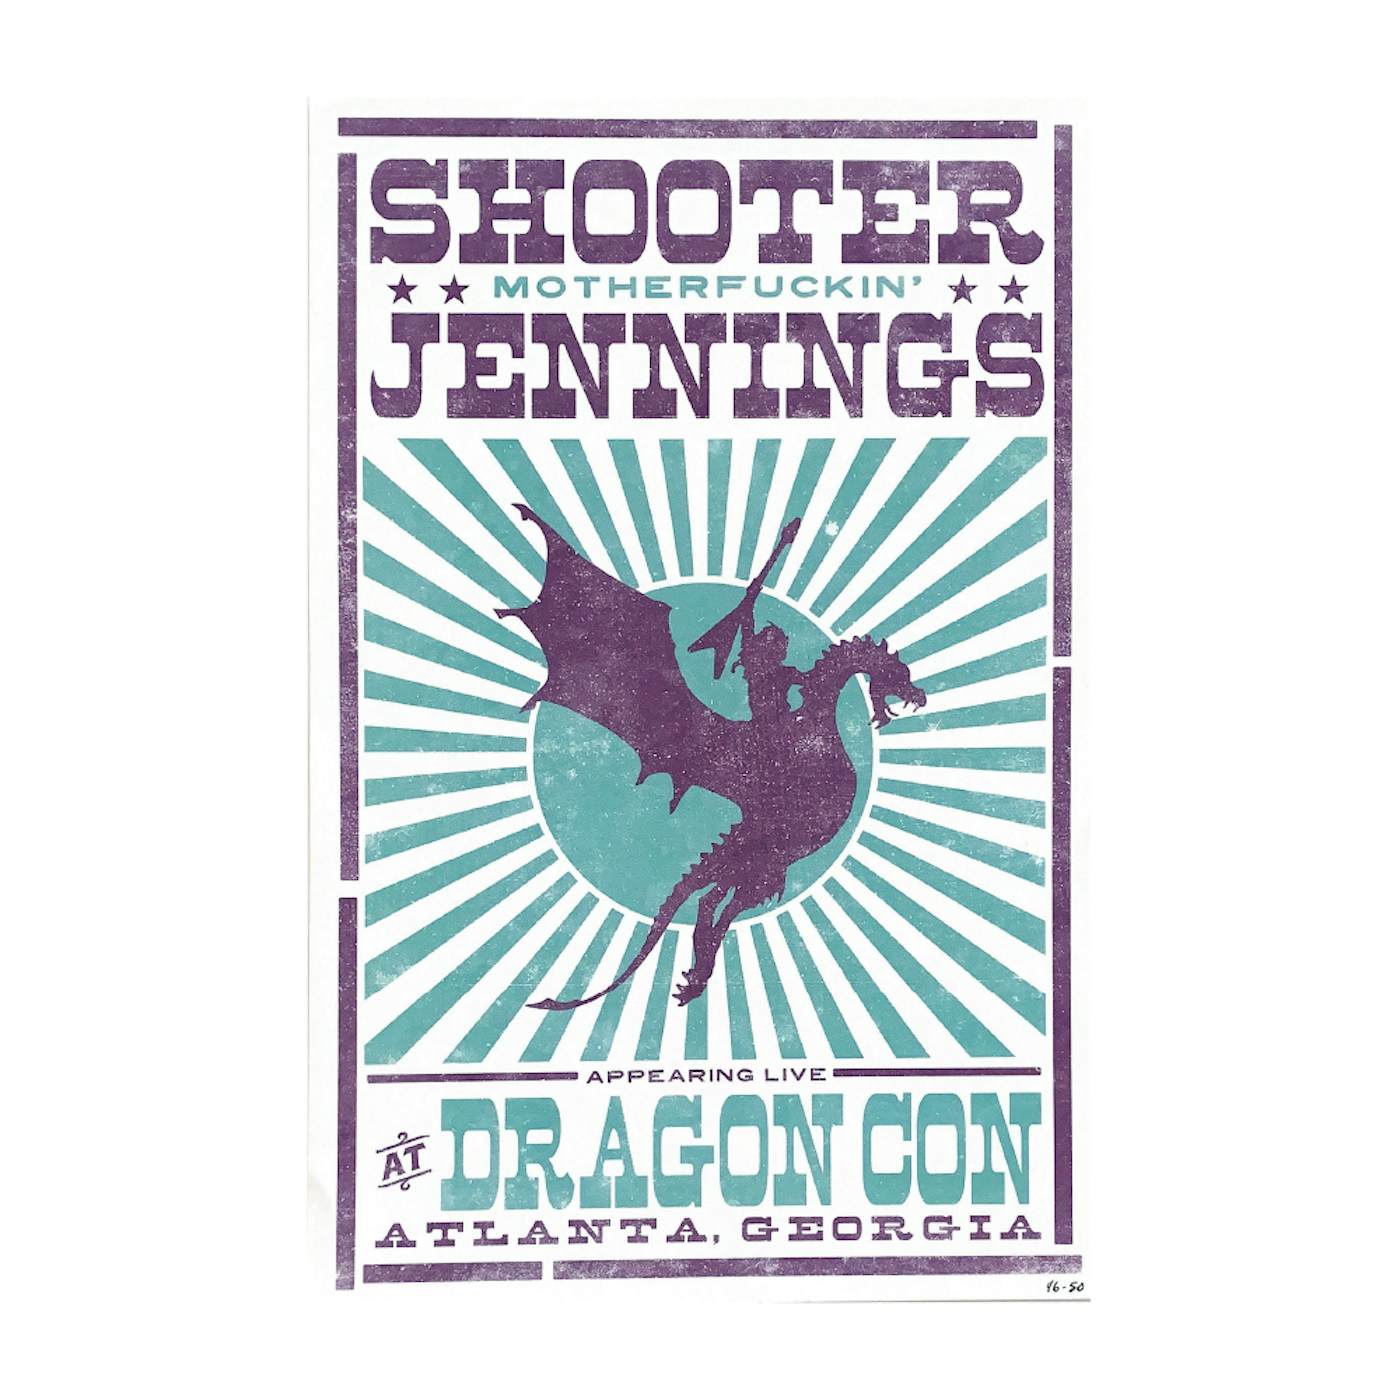 Shooter Jennings 2016 Dragoncon Poster